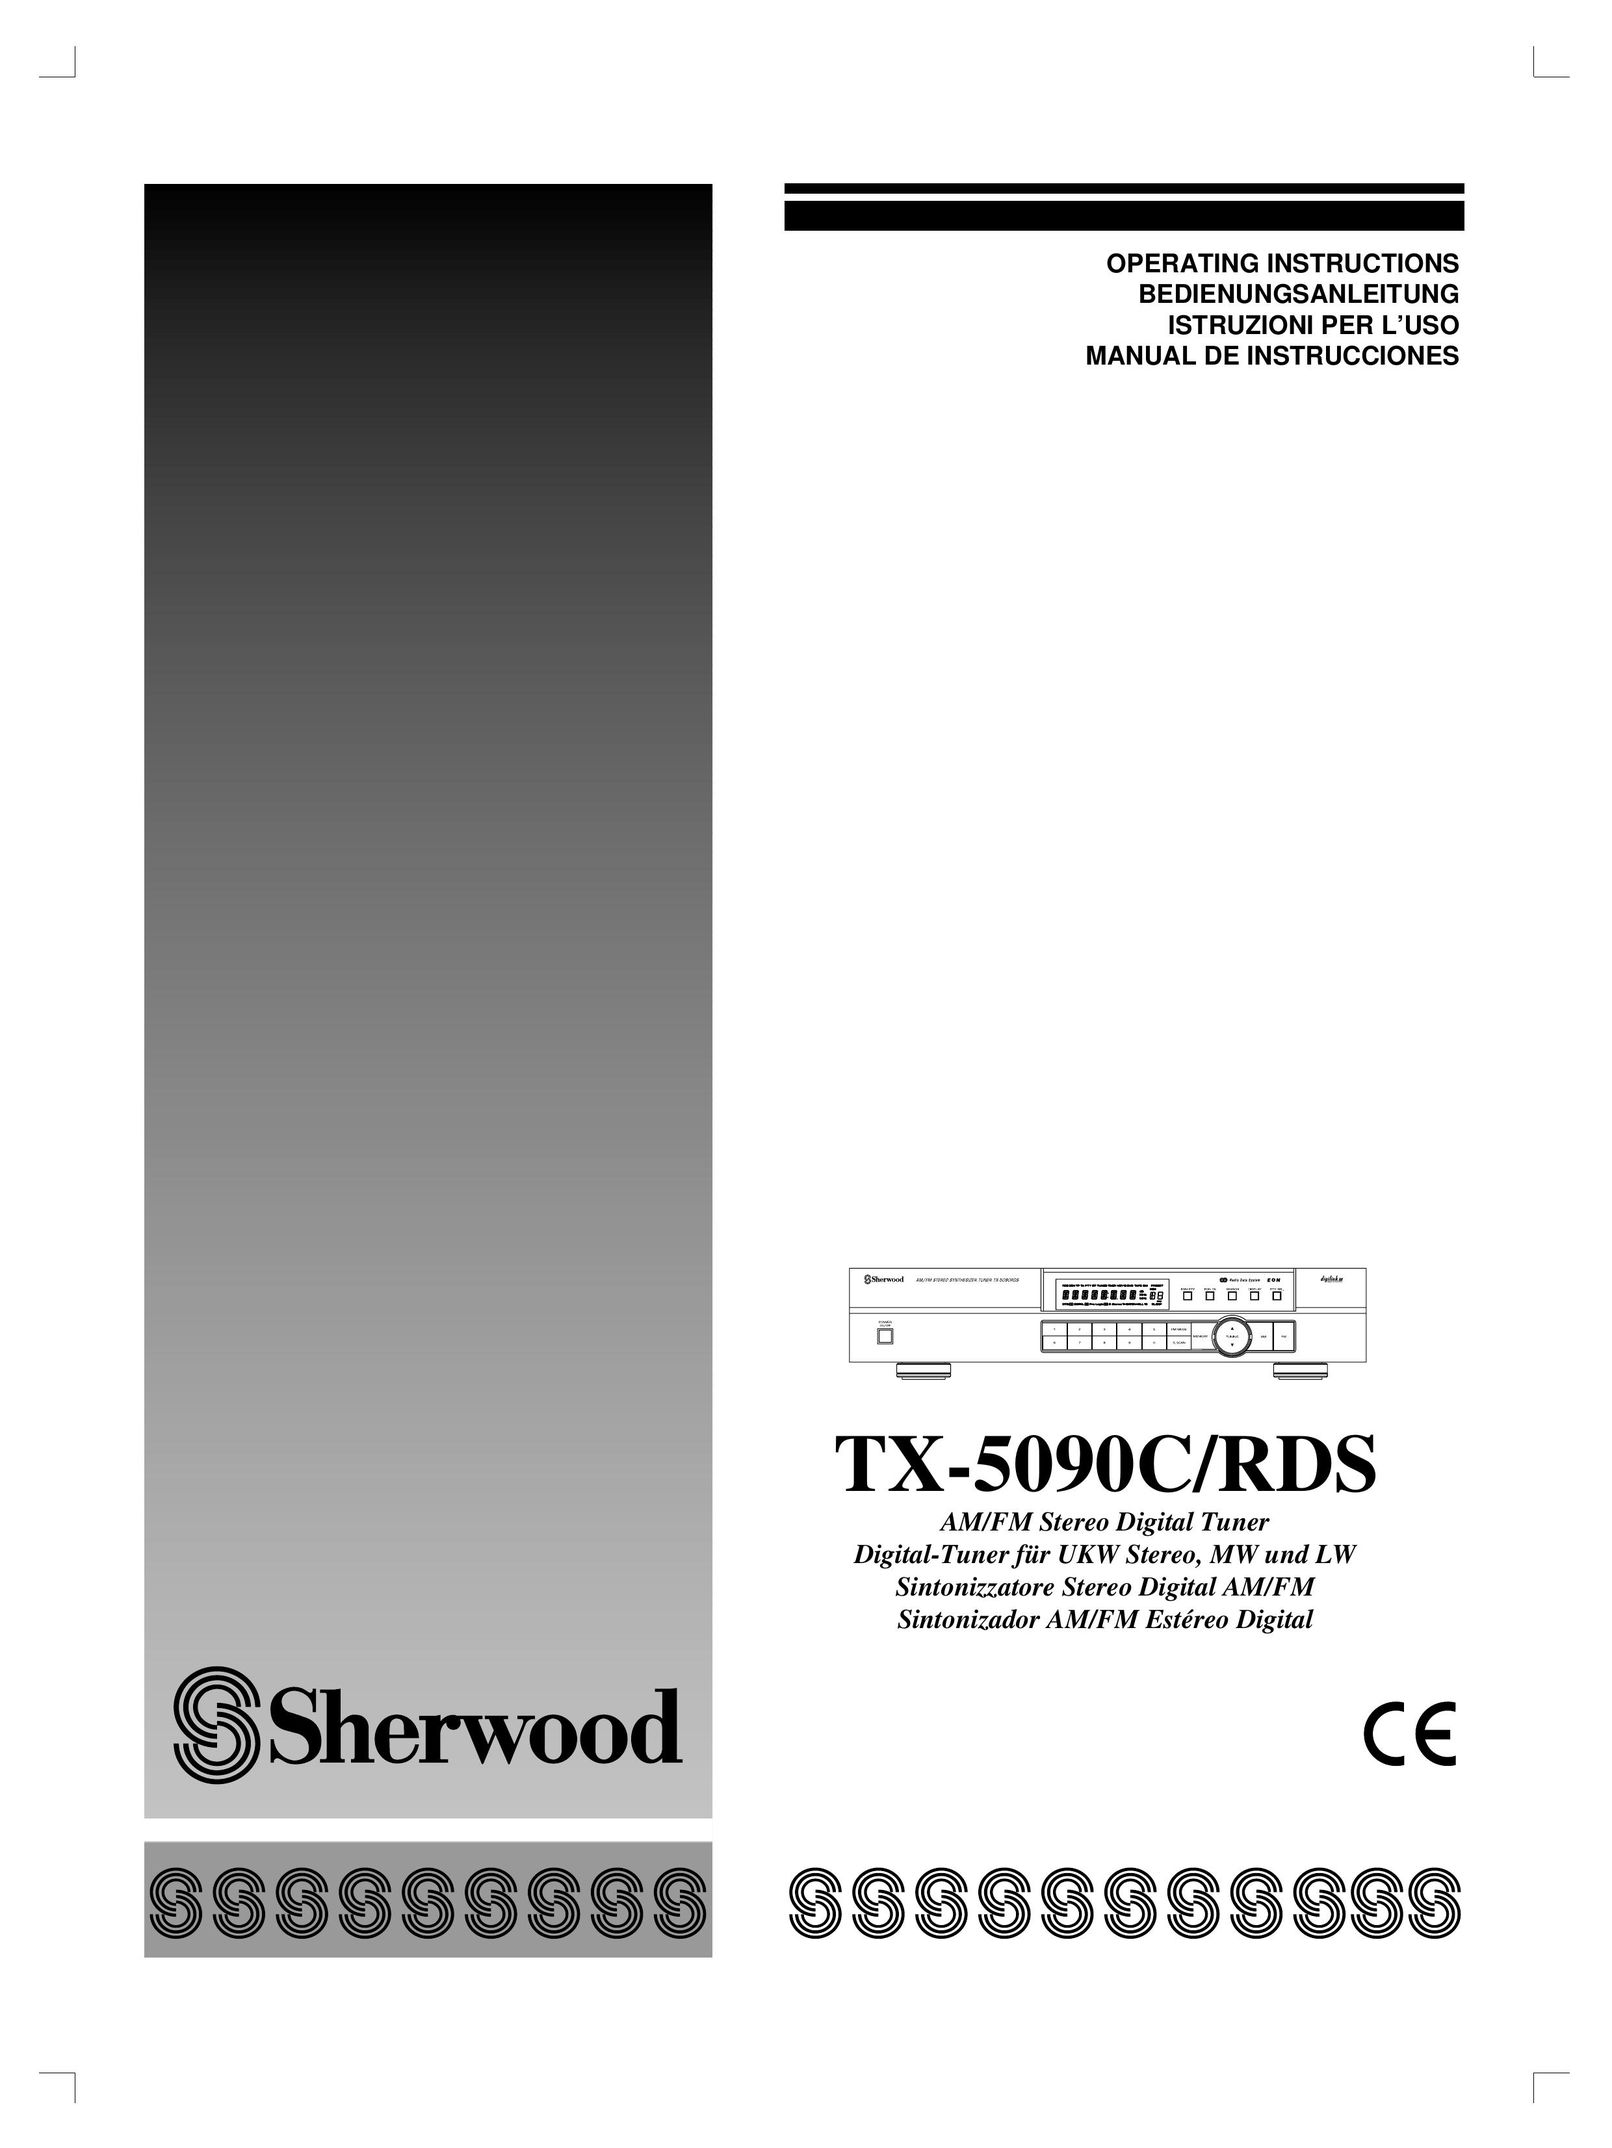 Sherwood TX-5090C Stereo System User Manual